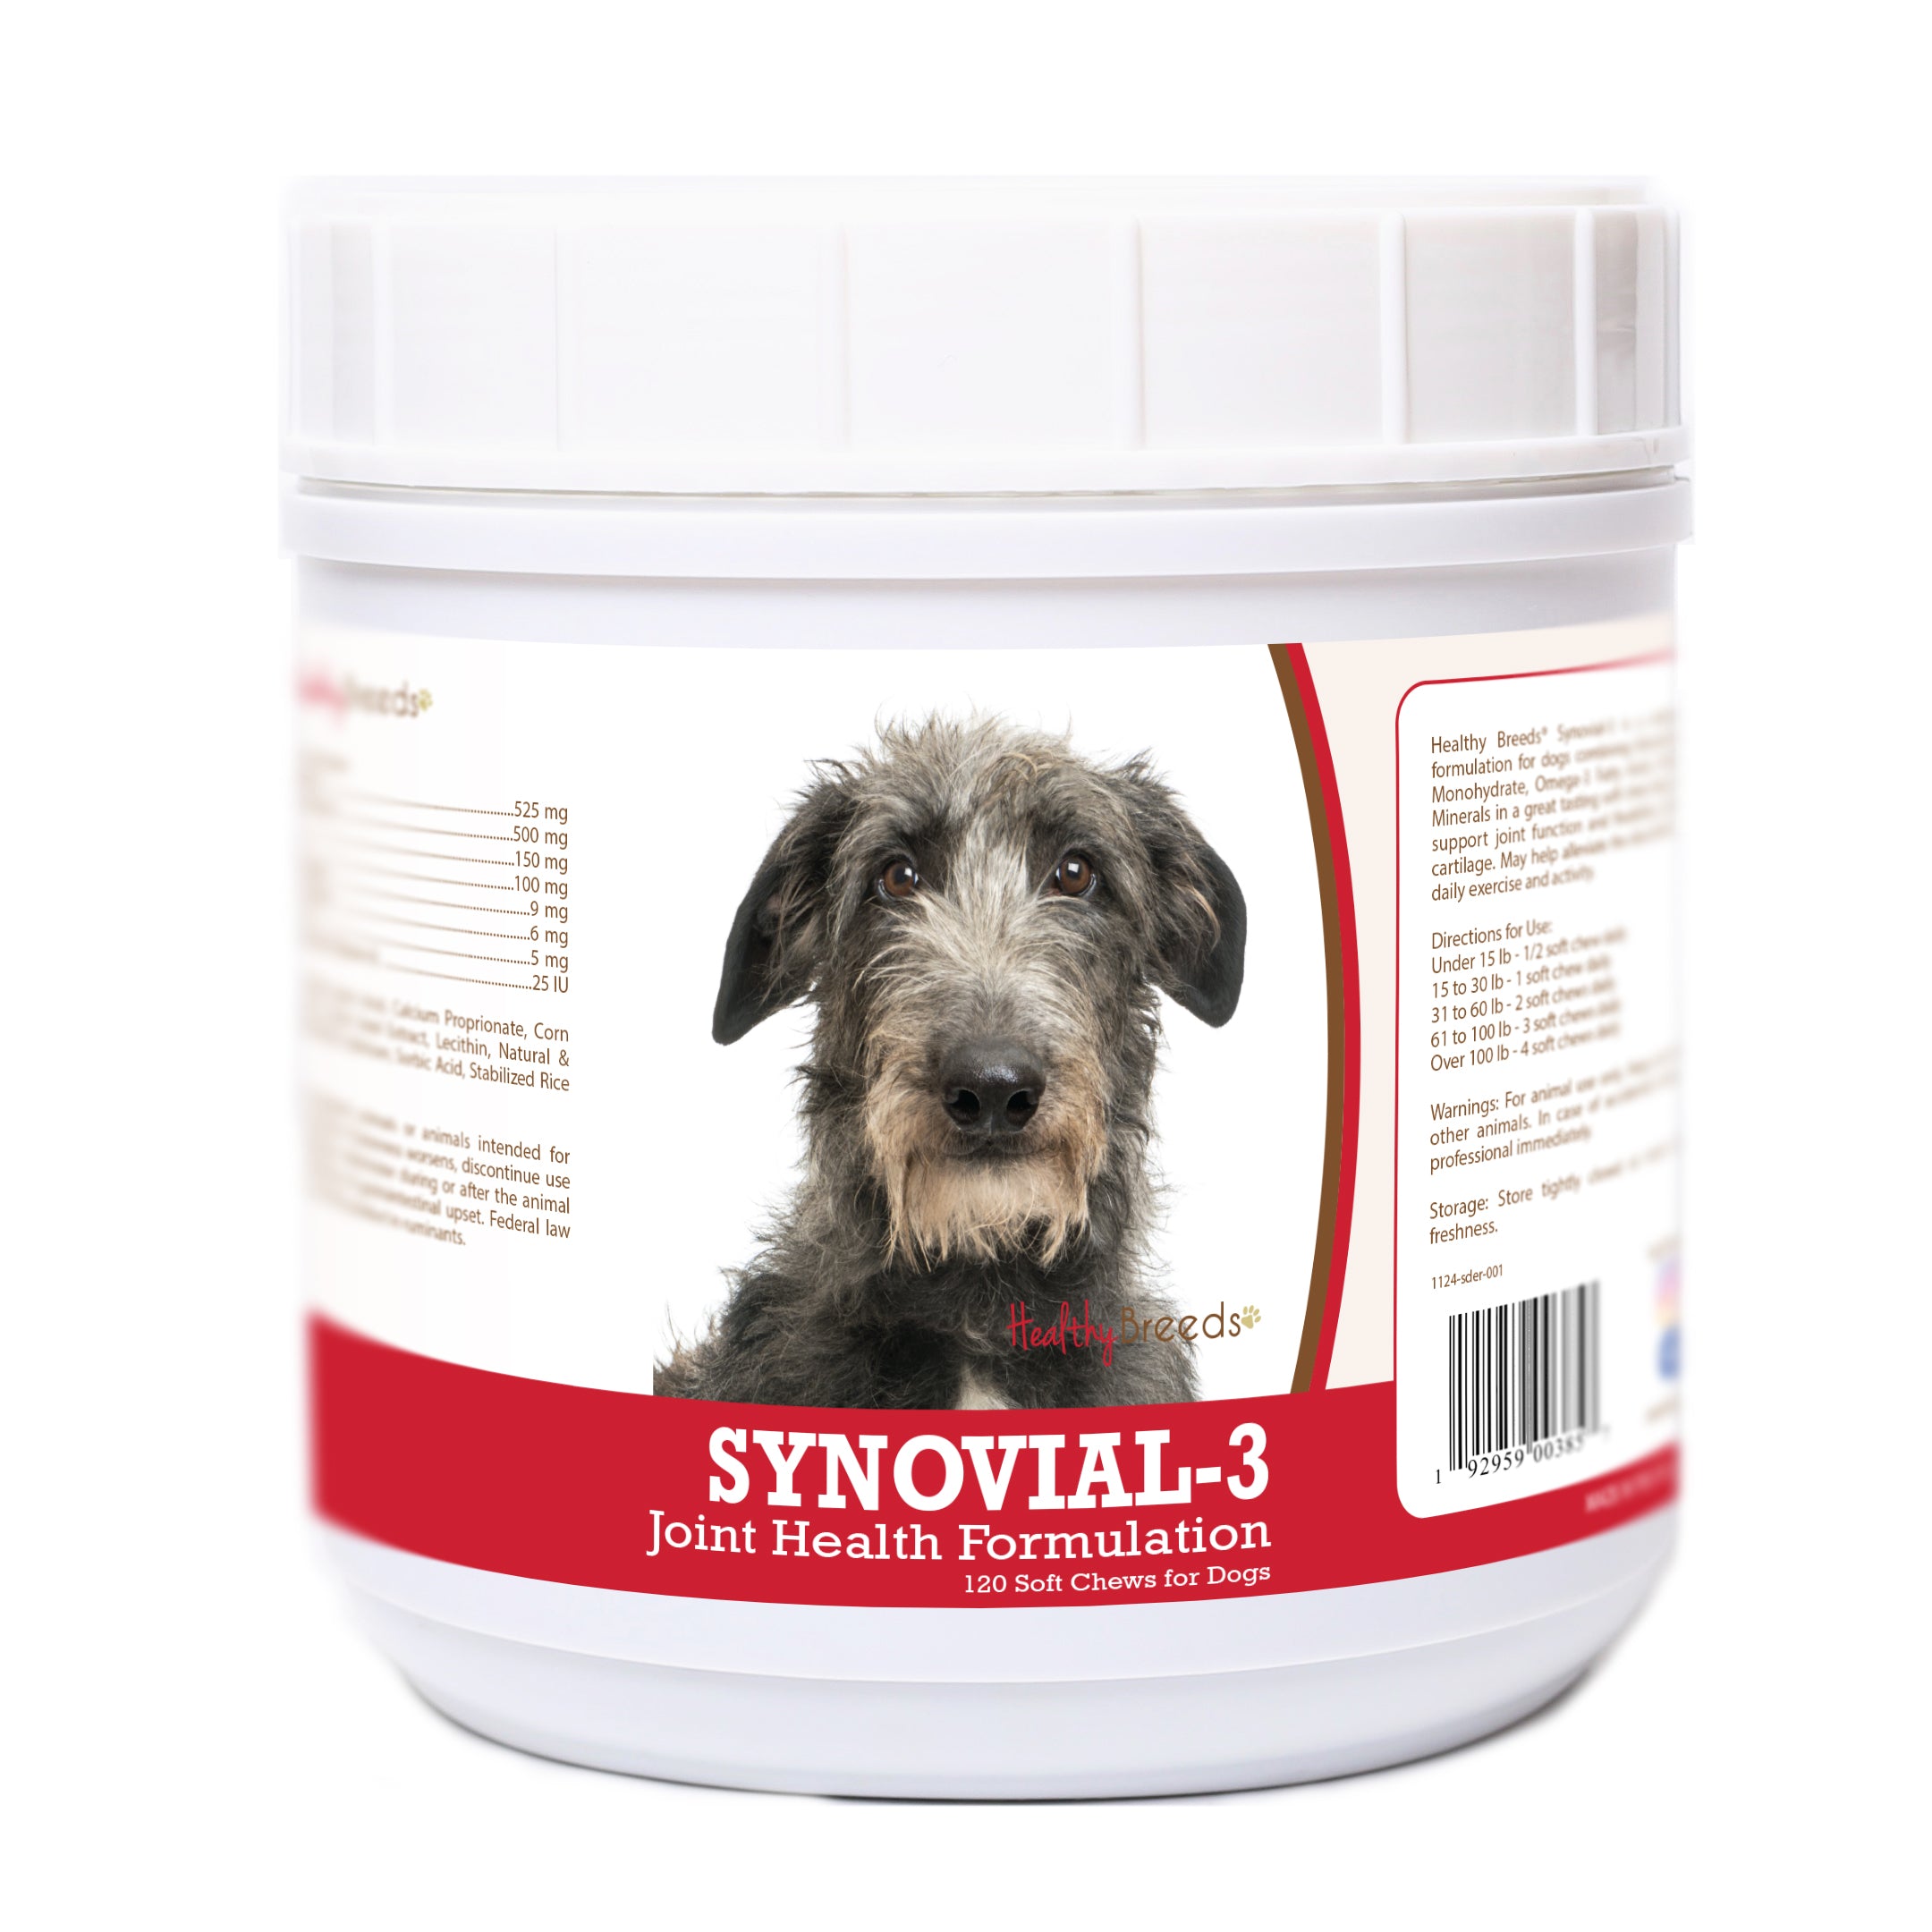 Scottish Deerhound Synovial-3 Joint Health Formulation Soft Chews 120 Count